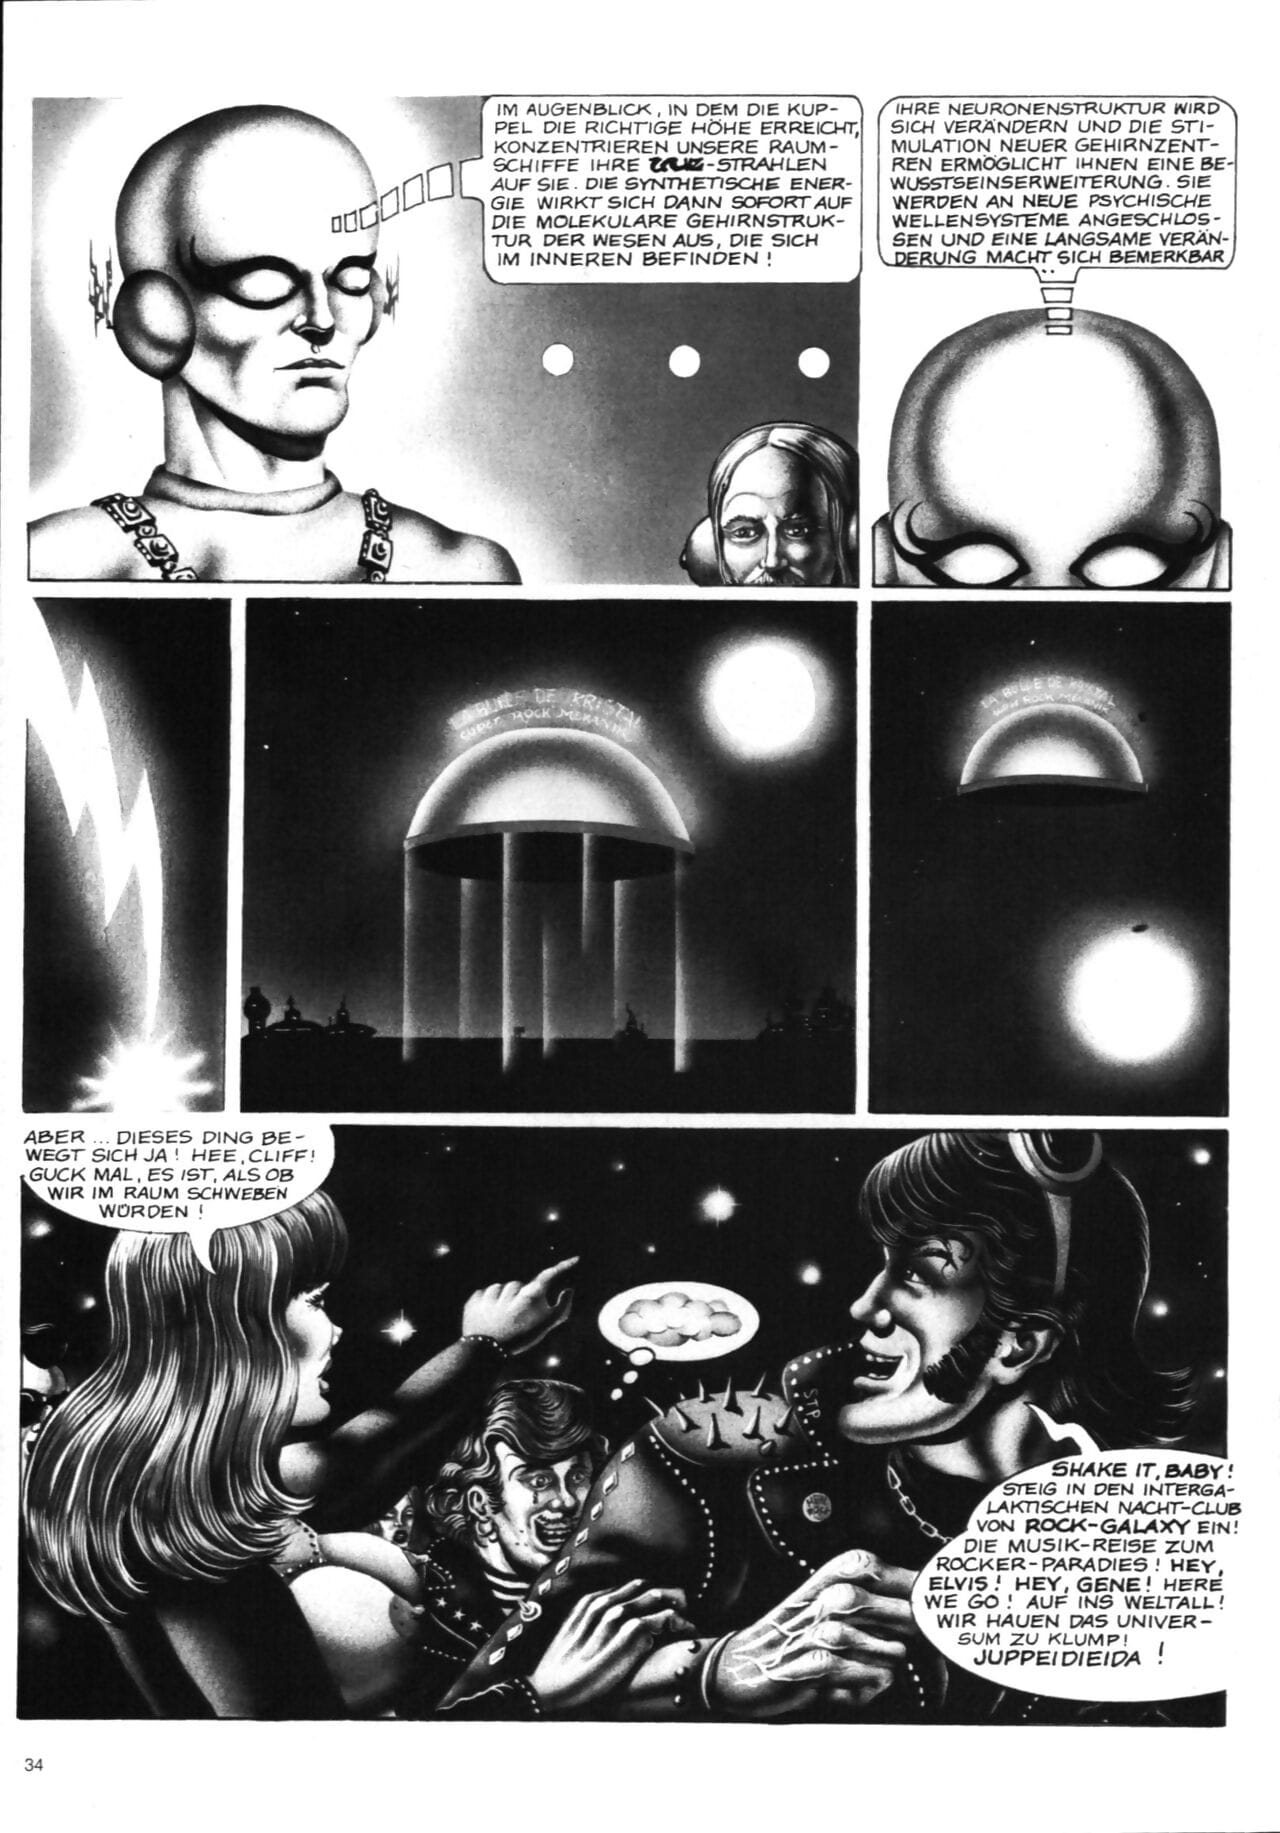 Schwermetall #010 parte 2 page 1